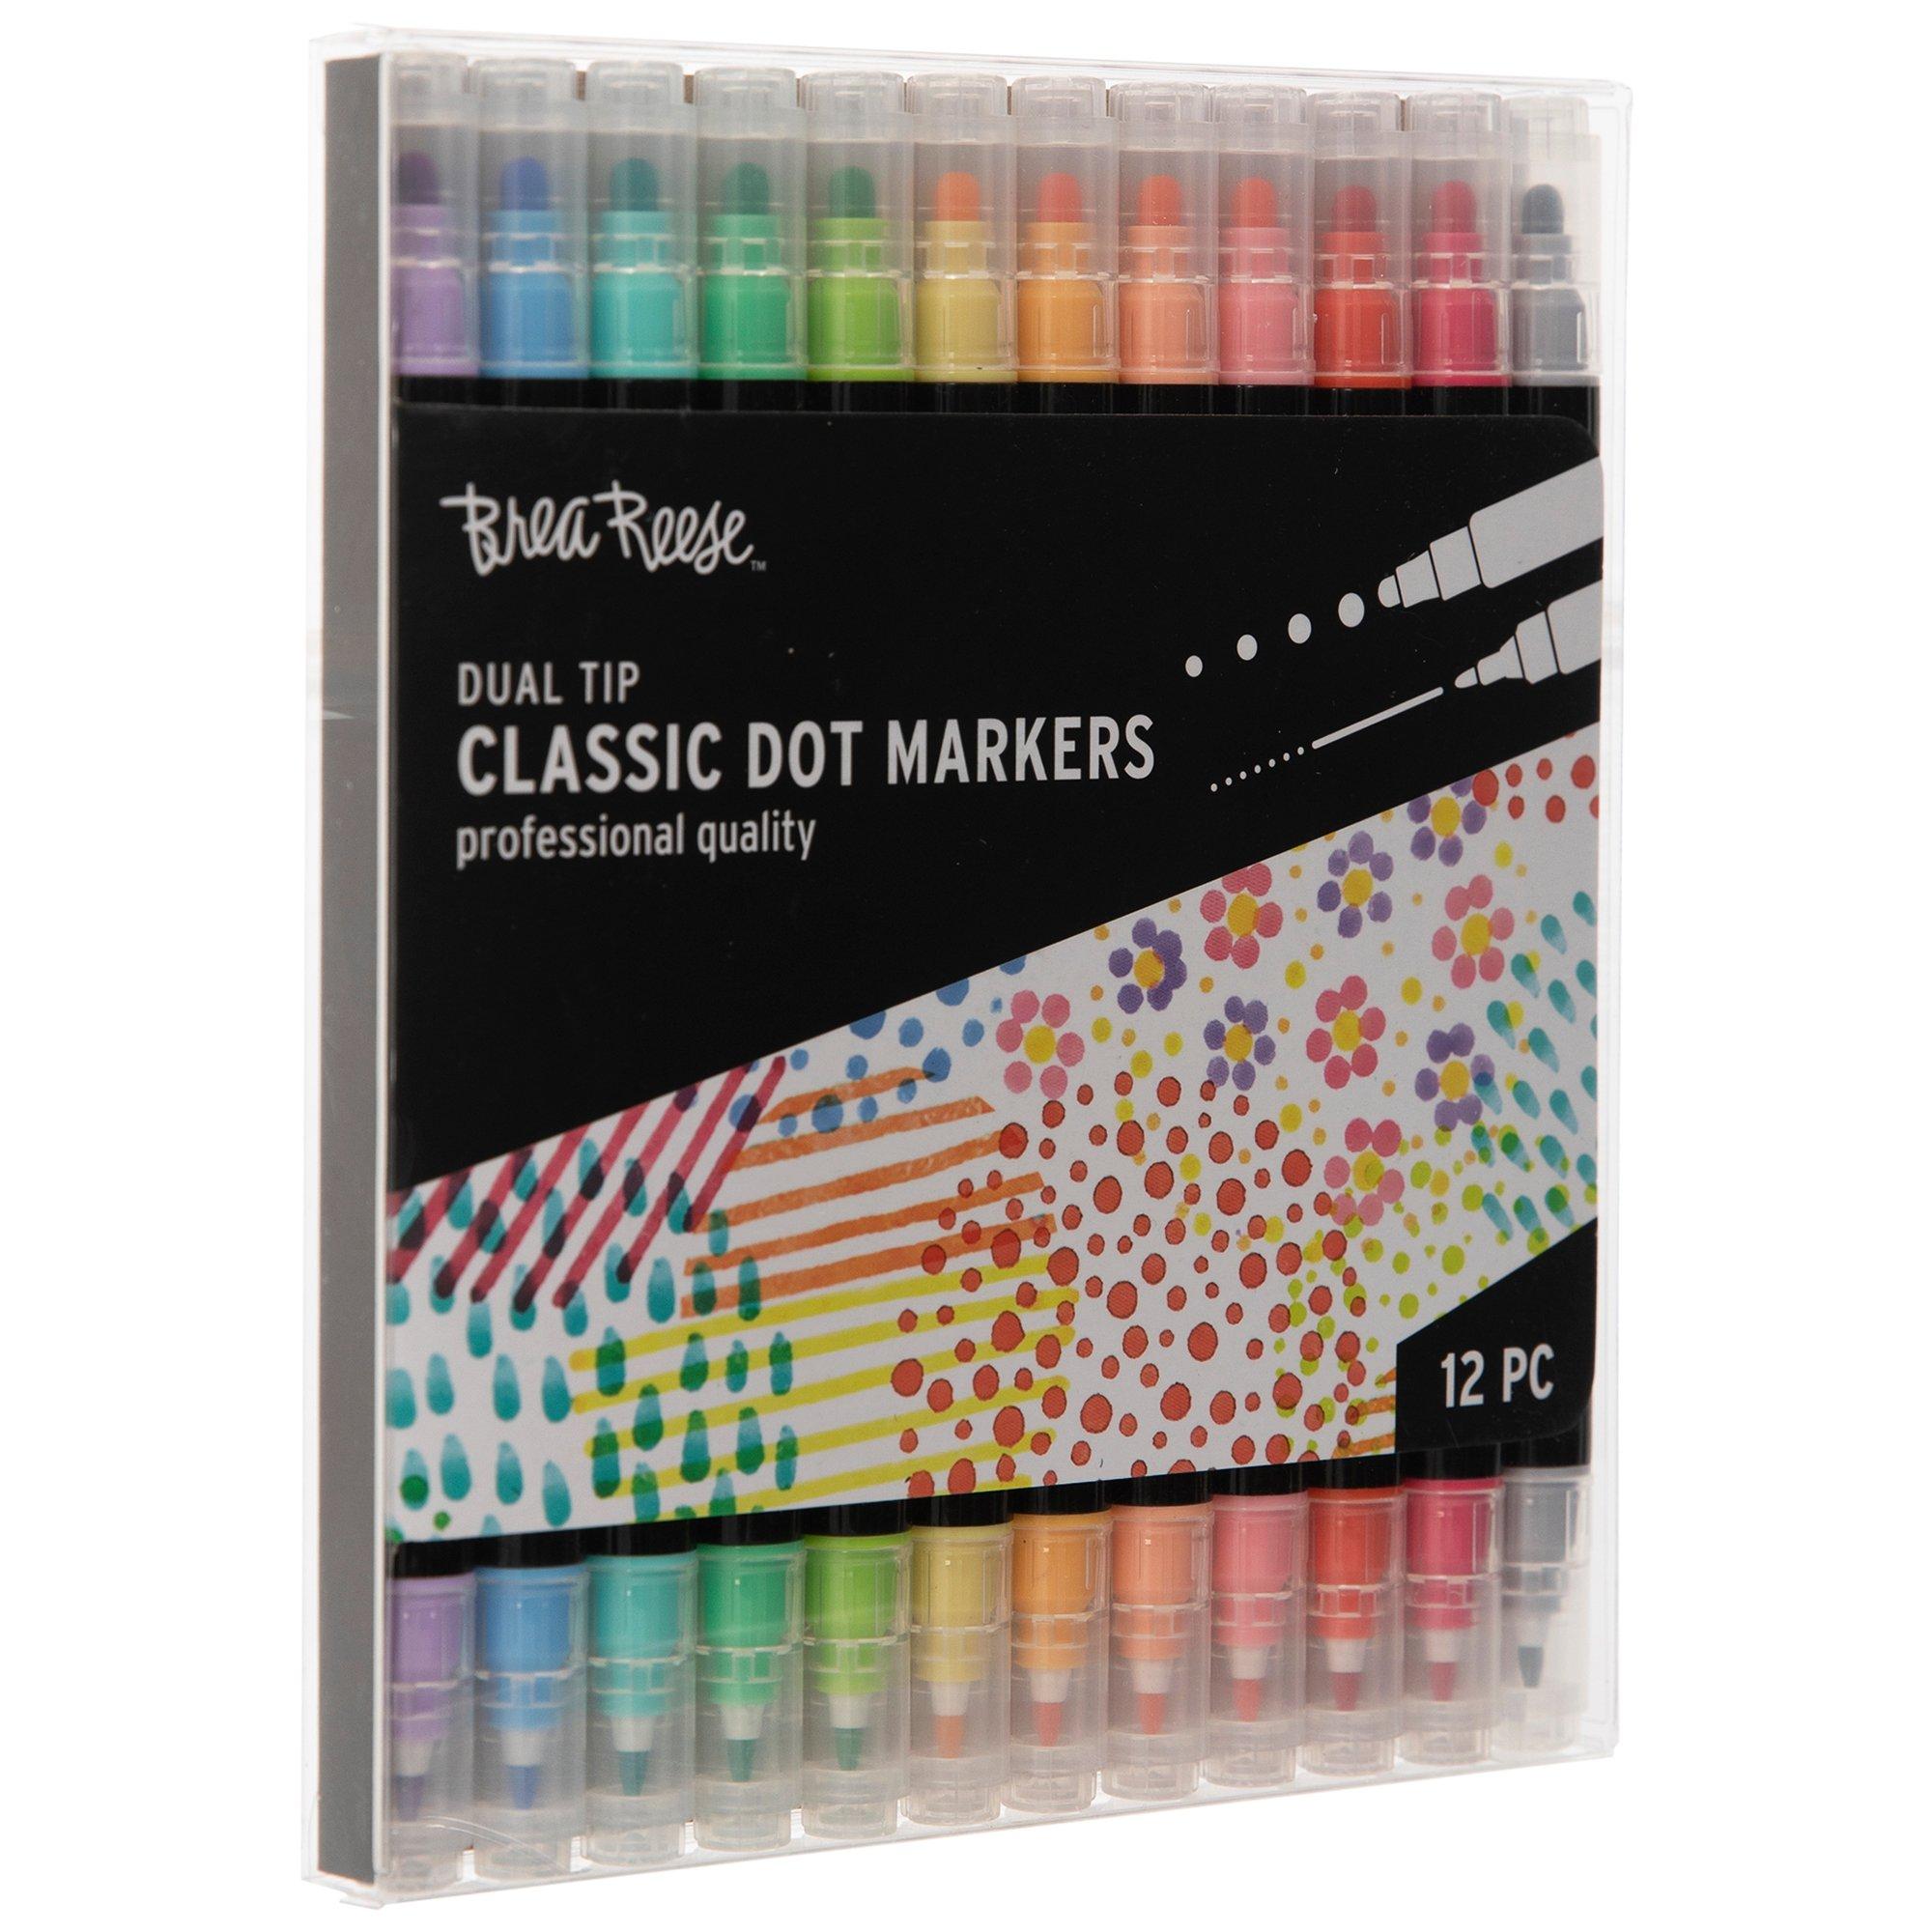  Bloodline Set Best 7 Selling Colors 1⁄2 Oz + 20 Stable Ink  Caps Bundle For Free